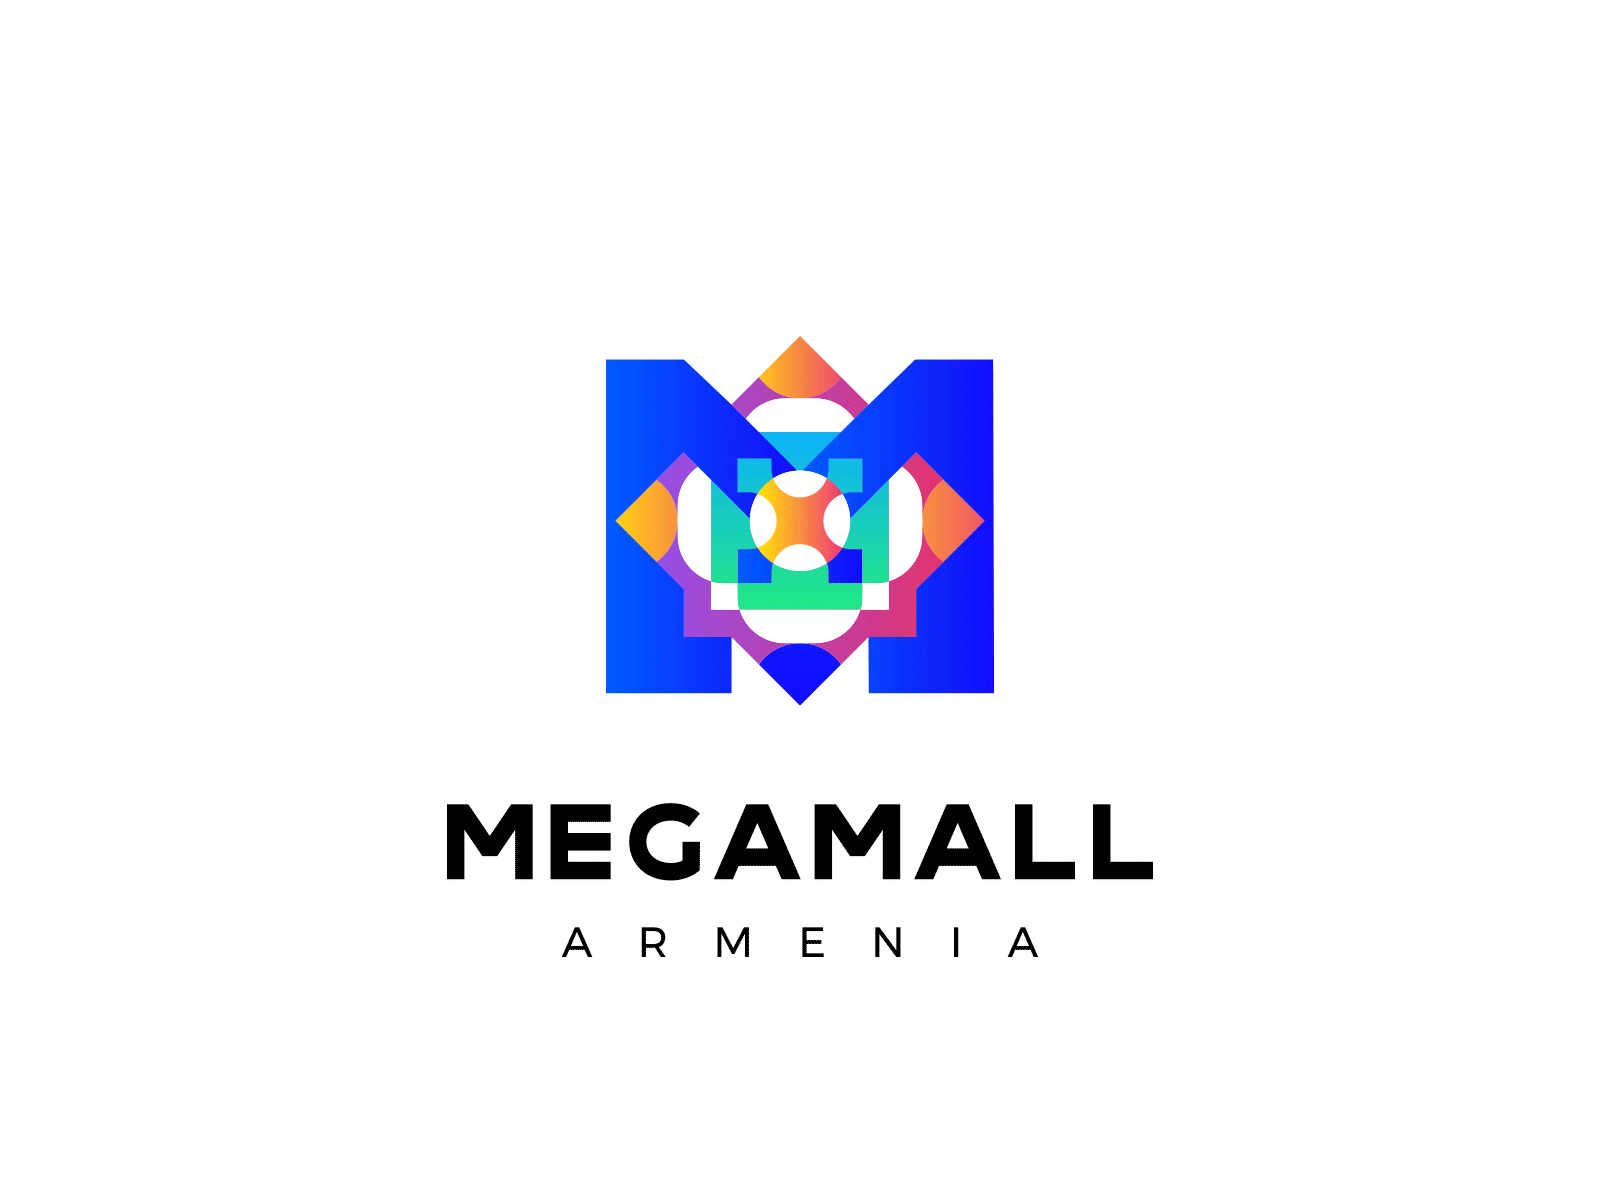 Megamall Armenia Logo Design